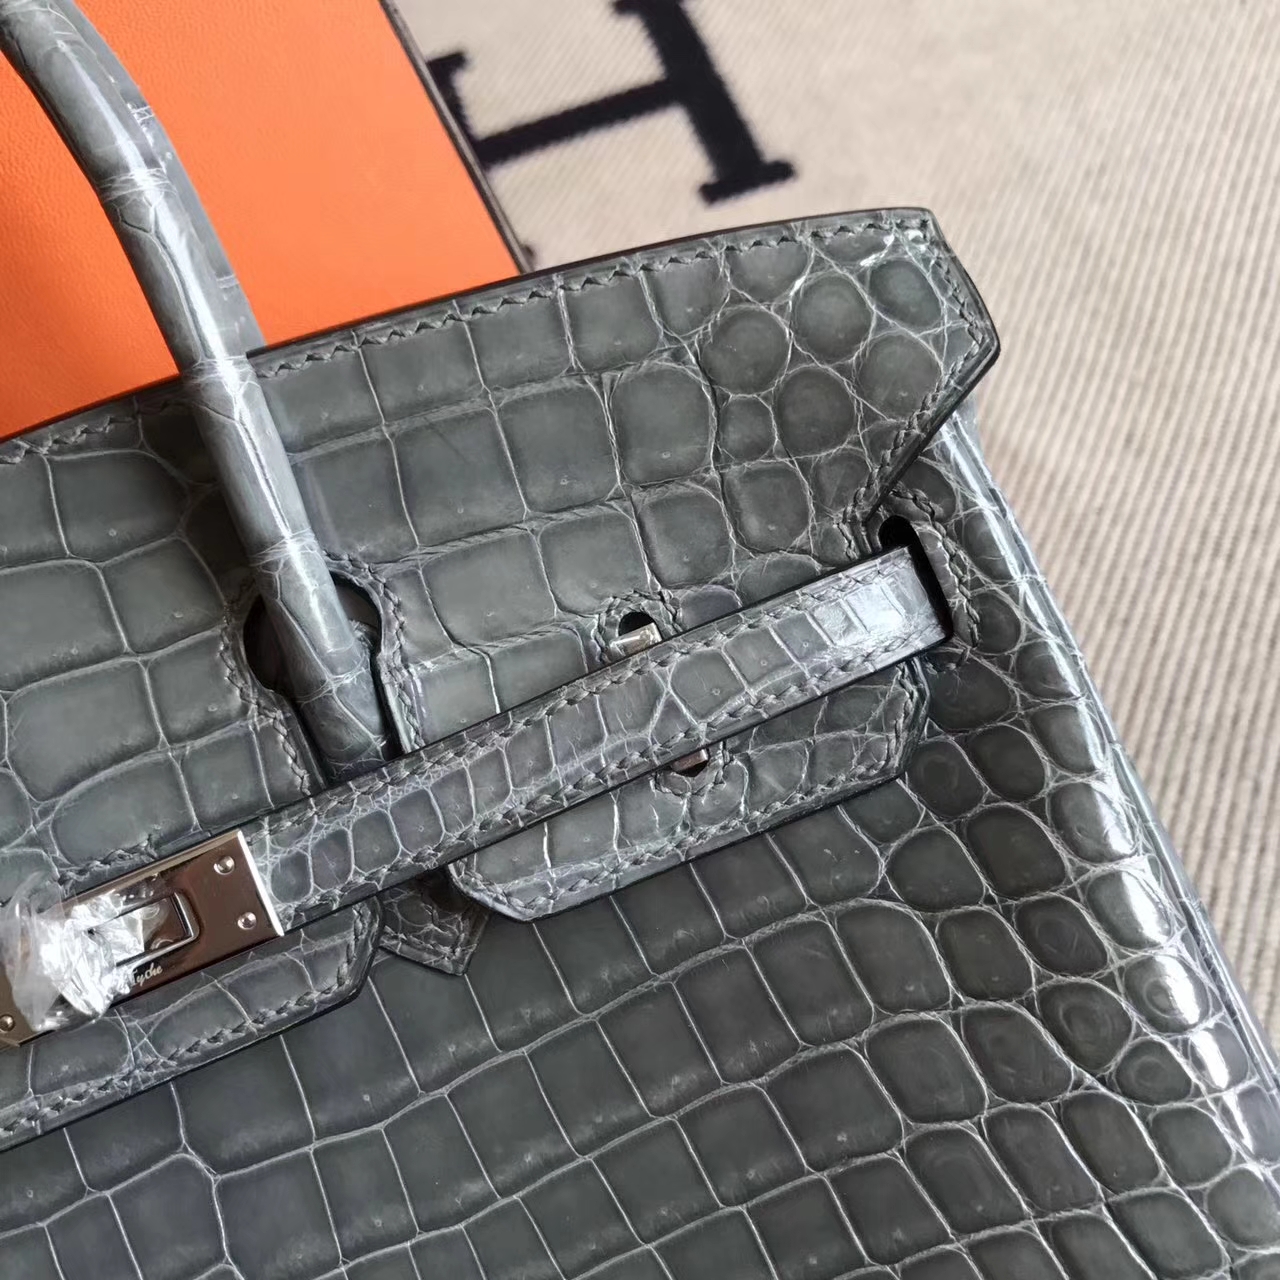 Wholesale Hermes Crocodile Shiny Birkin Handbag25cm in Mousse Grey